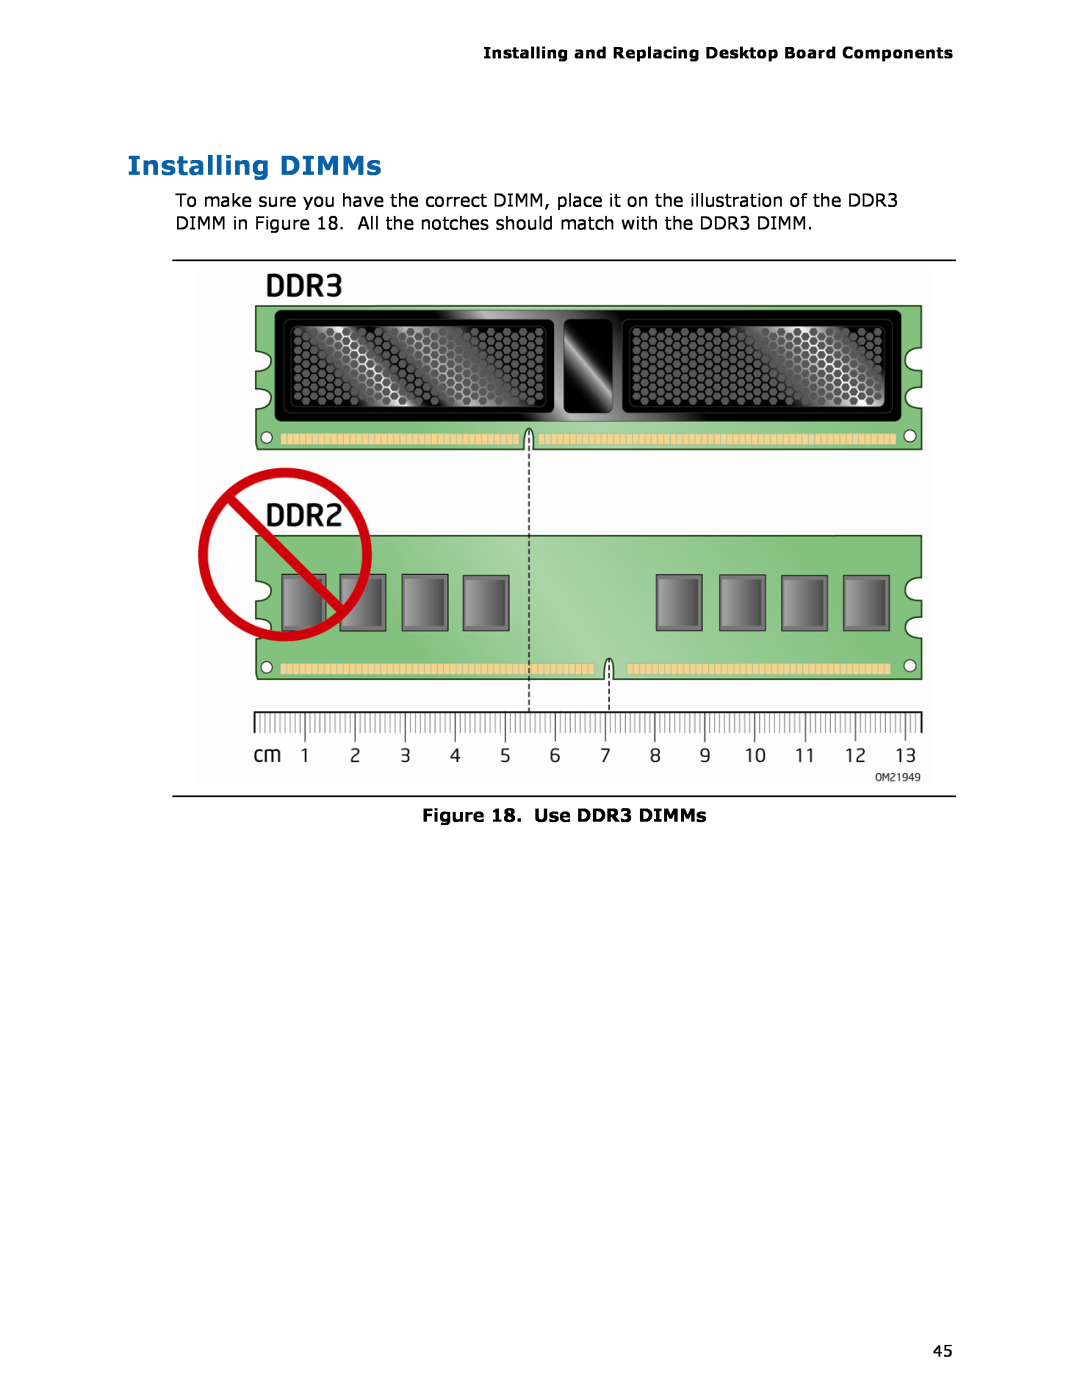 Intel DQ57TM manual Installing DIMMs, Use DDR3 DIMMs 